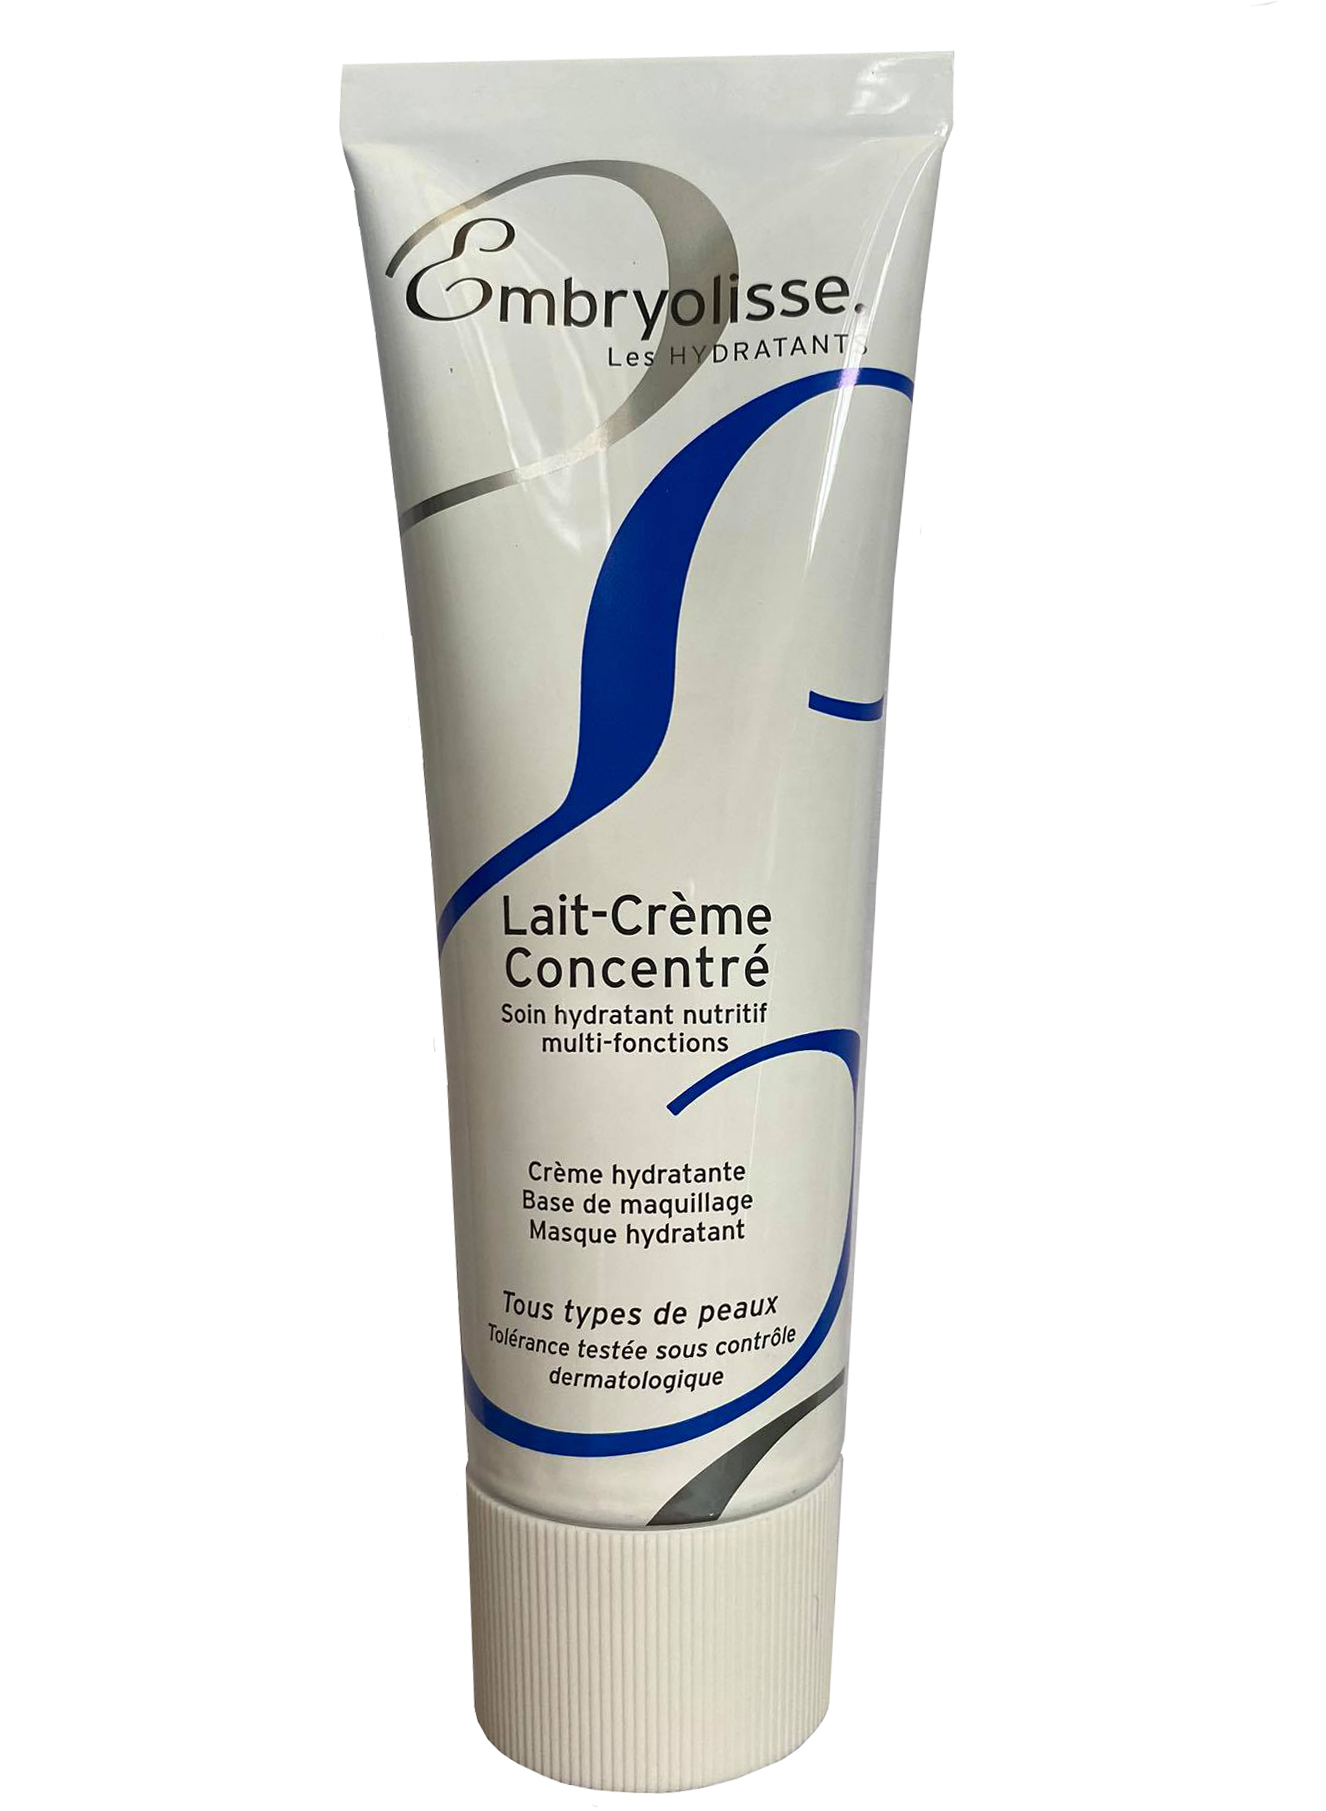 Embryolisse Lait – Crème Concentre là một loại kem dưỡng ẩm, cấp nước cho da